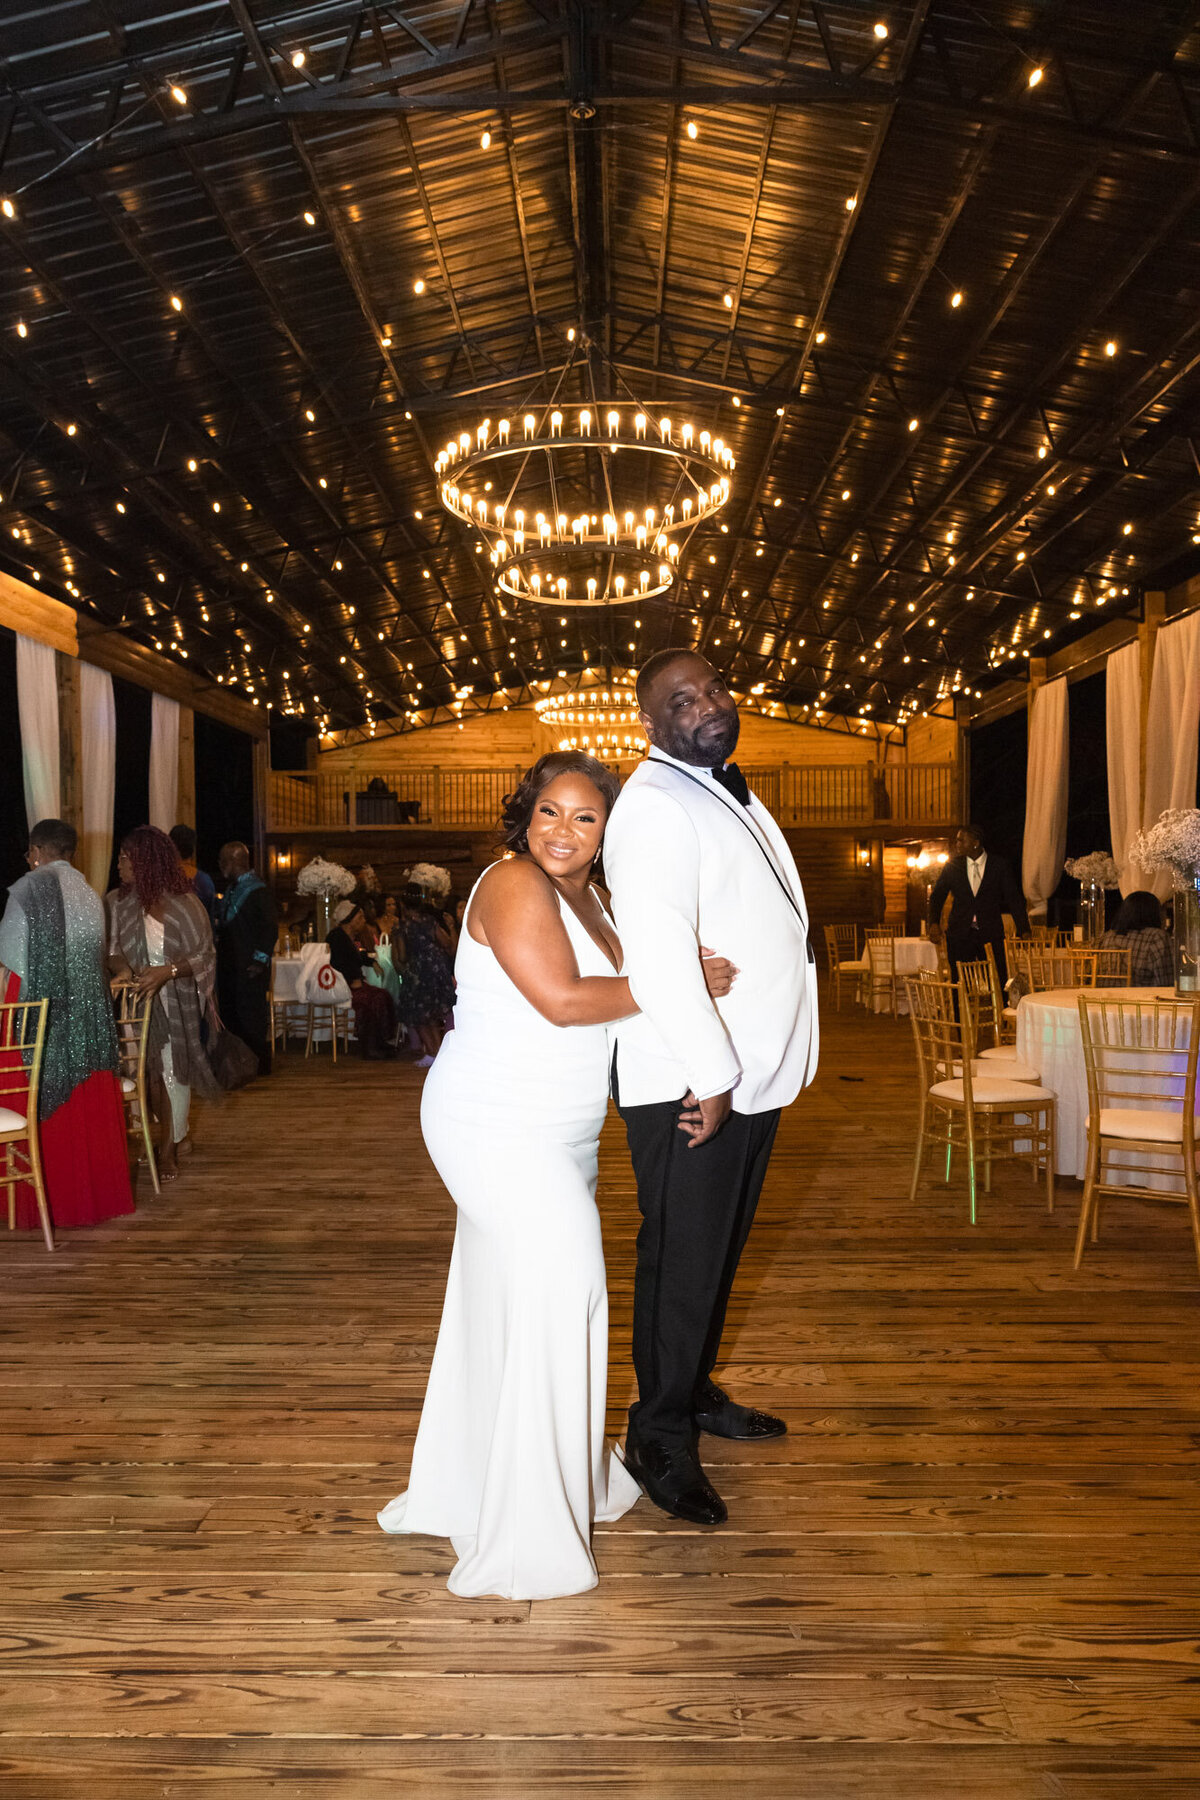 Michael and Mishka-Wedding-Green Cabin Ranch-Astatula, FL-FL Wedding Photographer-Orlando Photographer-Emily Pillon Photography-S-120423-495